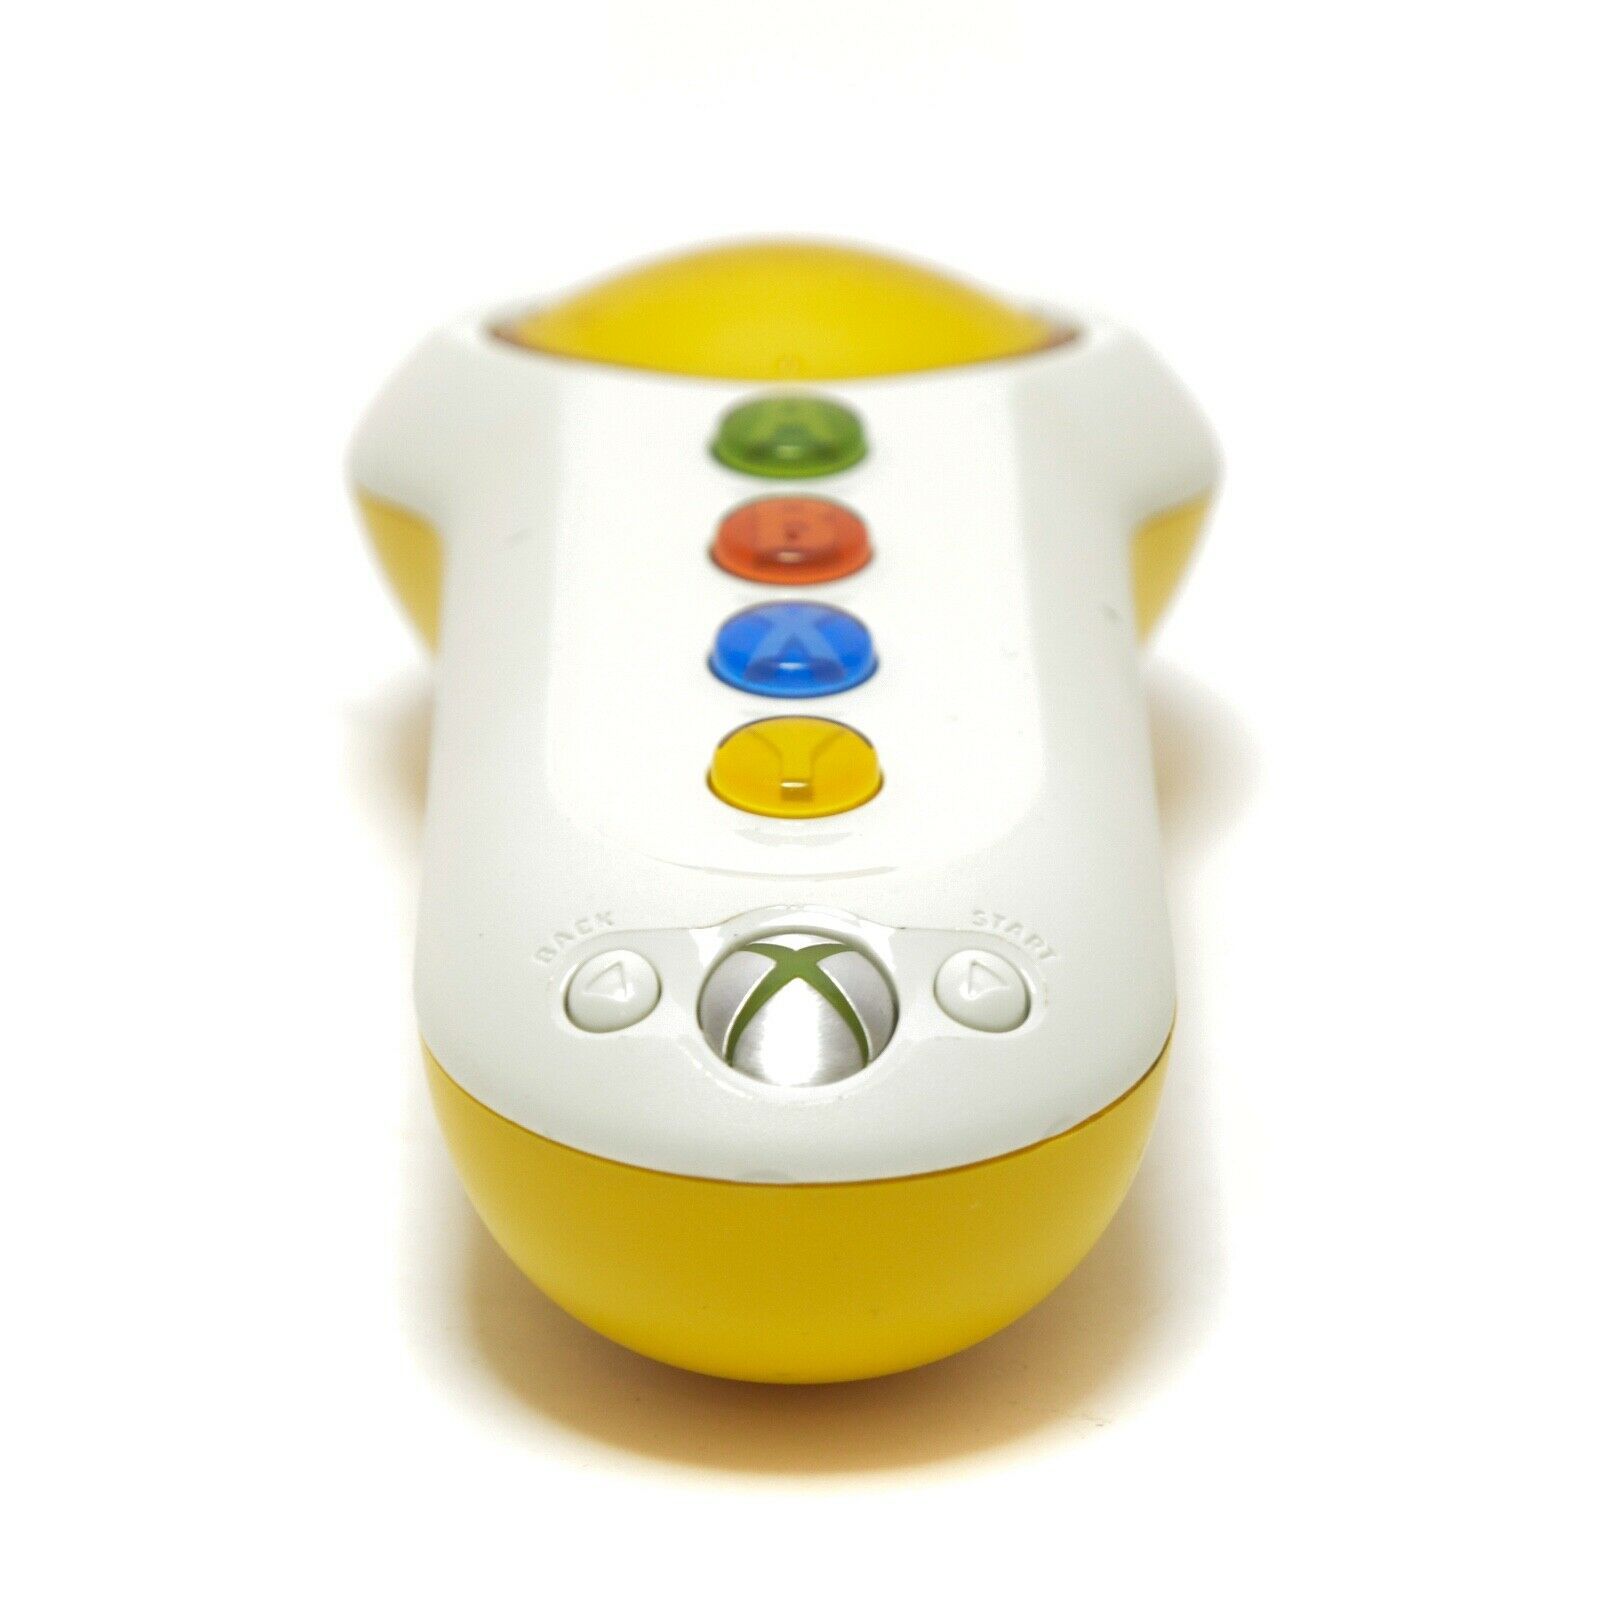 Characterize Professor Saturate Yellow Xbox 360 Scene It Wireless Buzzer Big and similar items